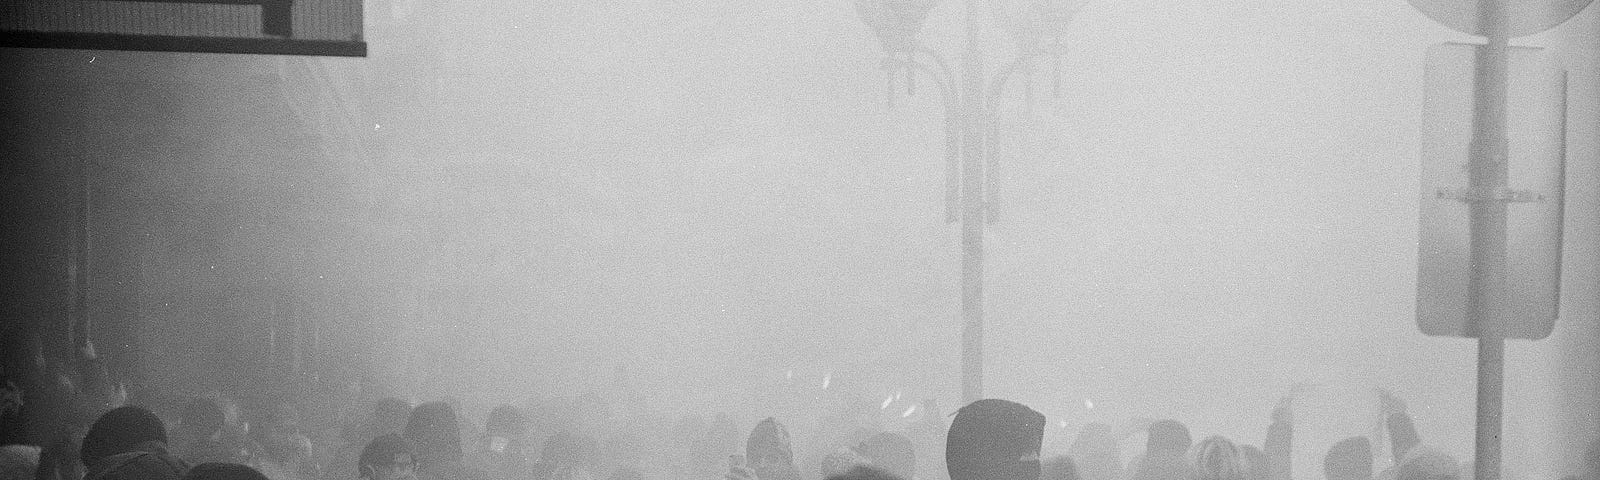 smog filled streets